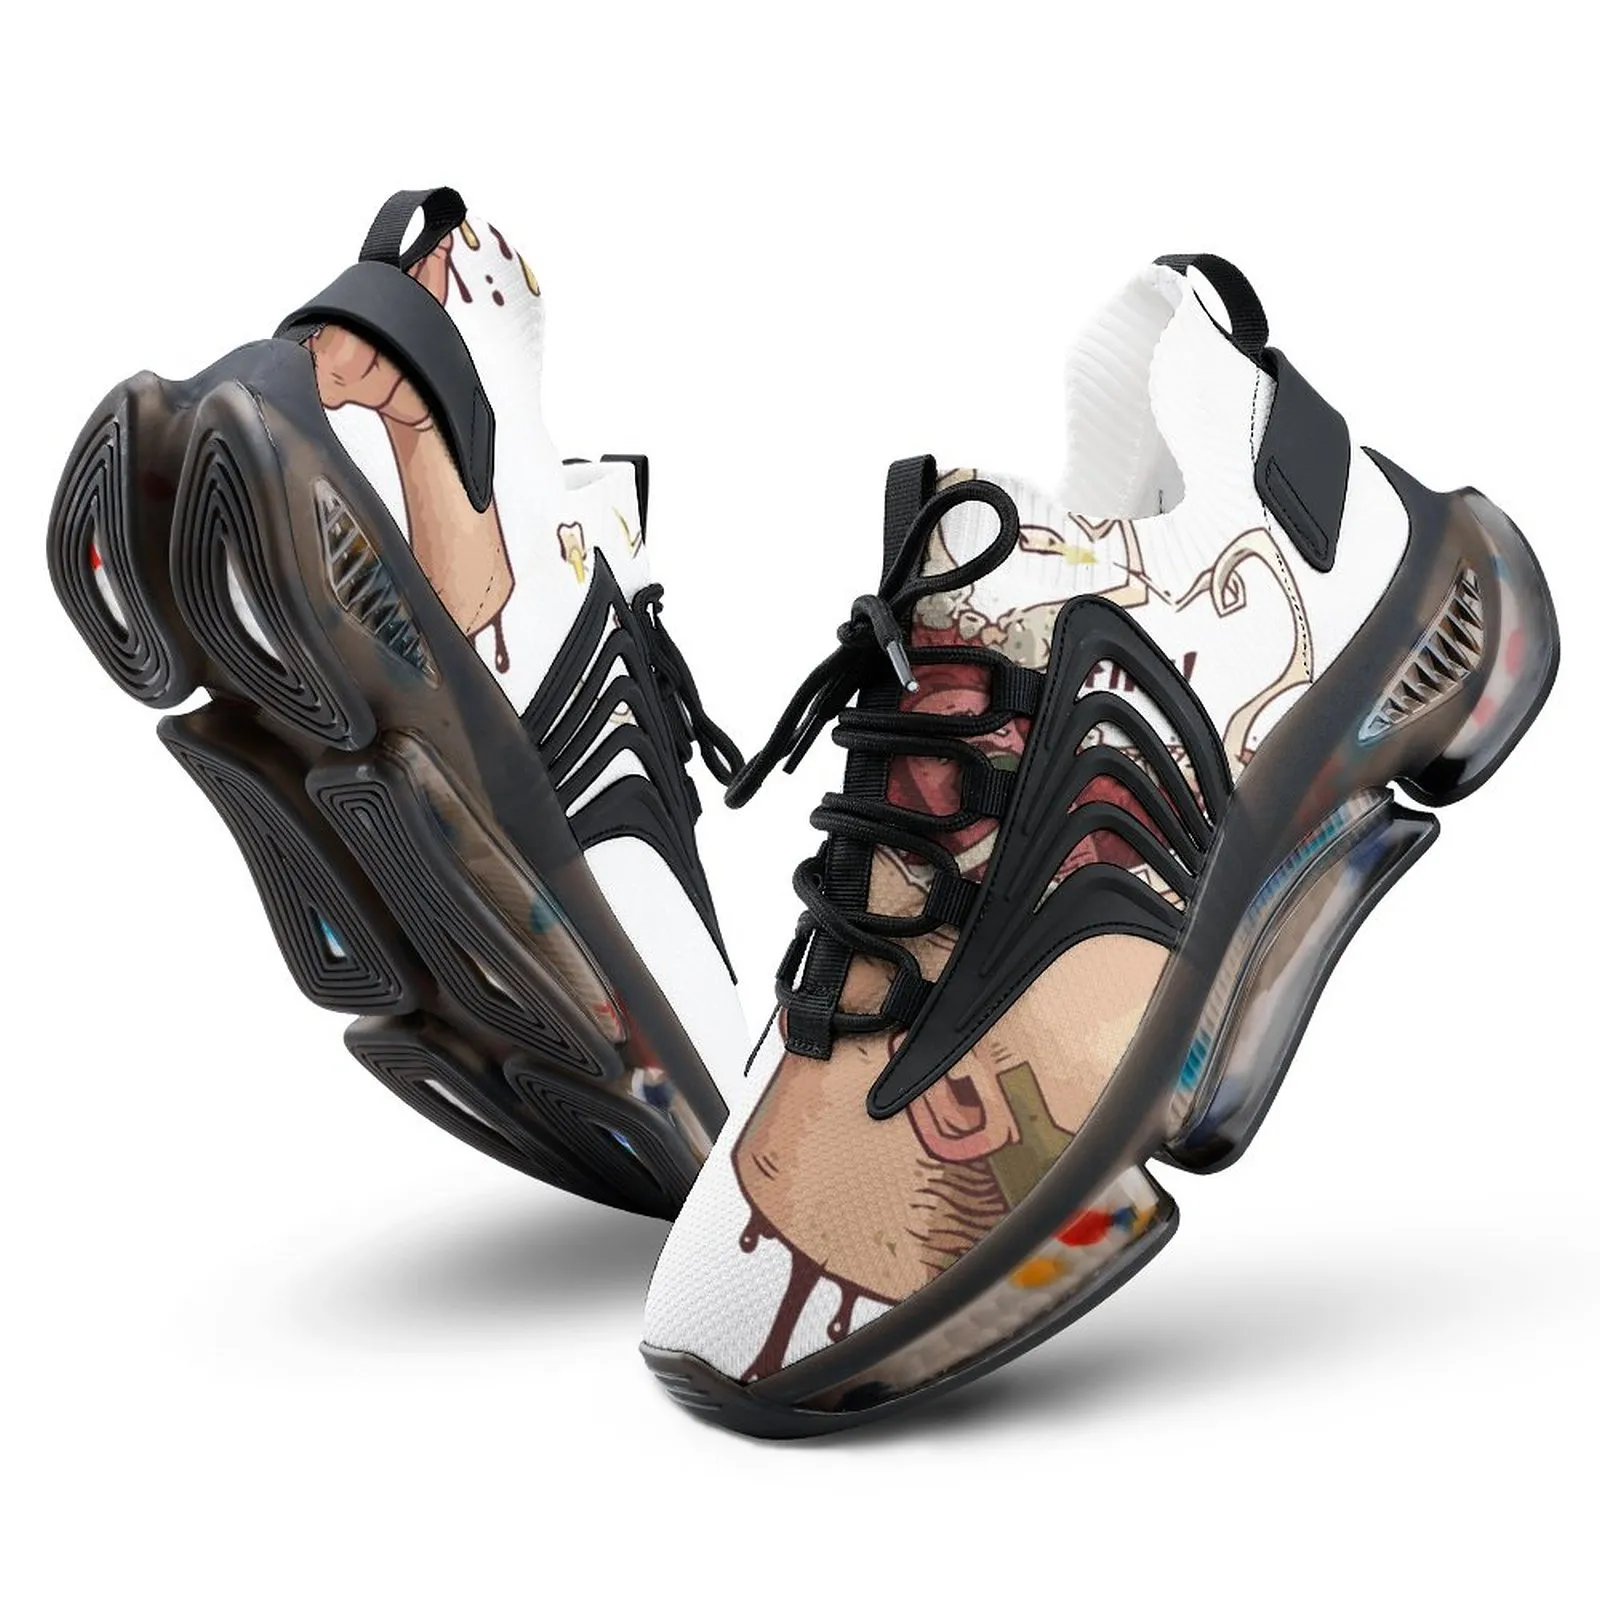 Custom Mens Sports Schuhe elastizieren komfortable fliegen weave leichte atmungsaktive b23 trainer sneakers Größe 38-46